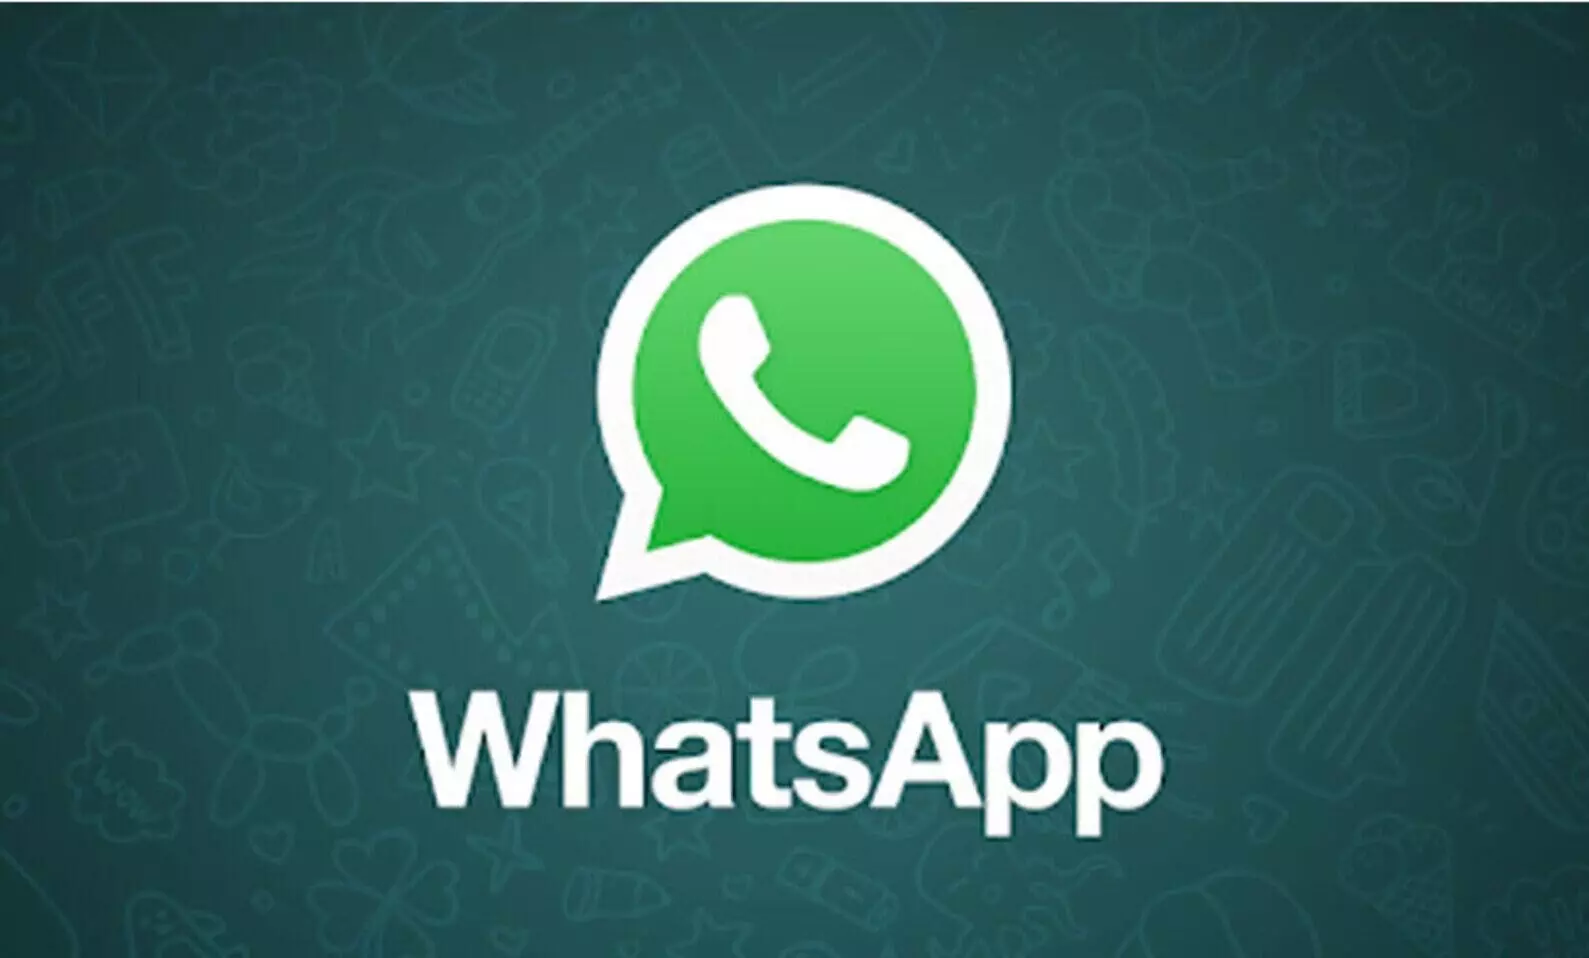 WhatsApp calls now possible via desktop